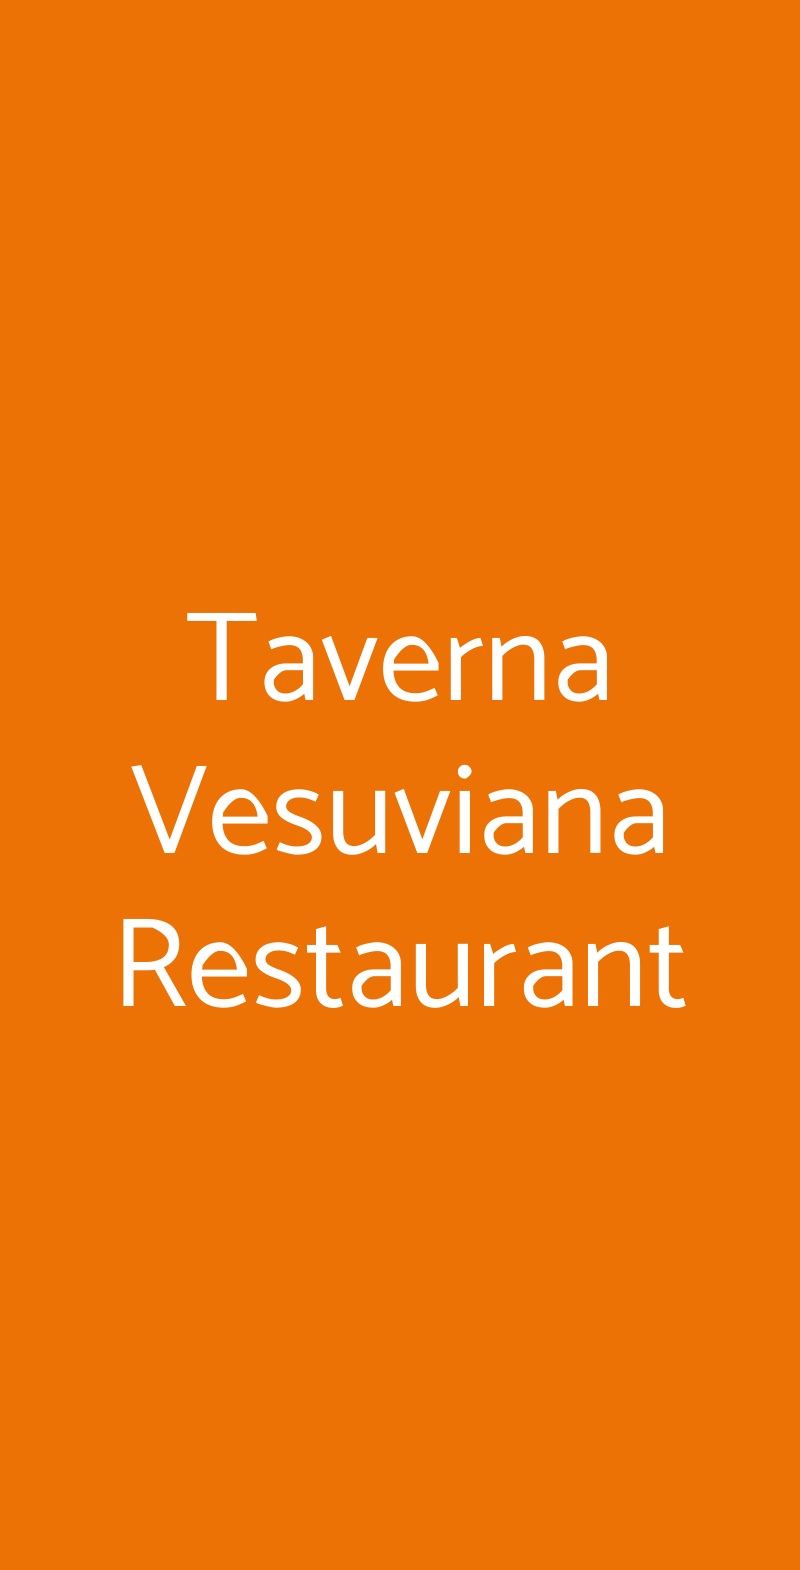 Taverna Vesuviana Restaurant San Gennaro Vesuviano menù 1 pagina